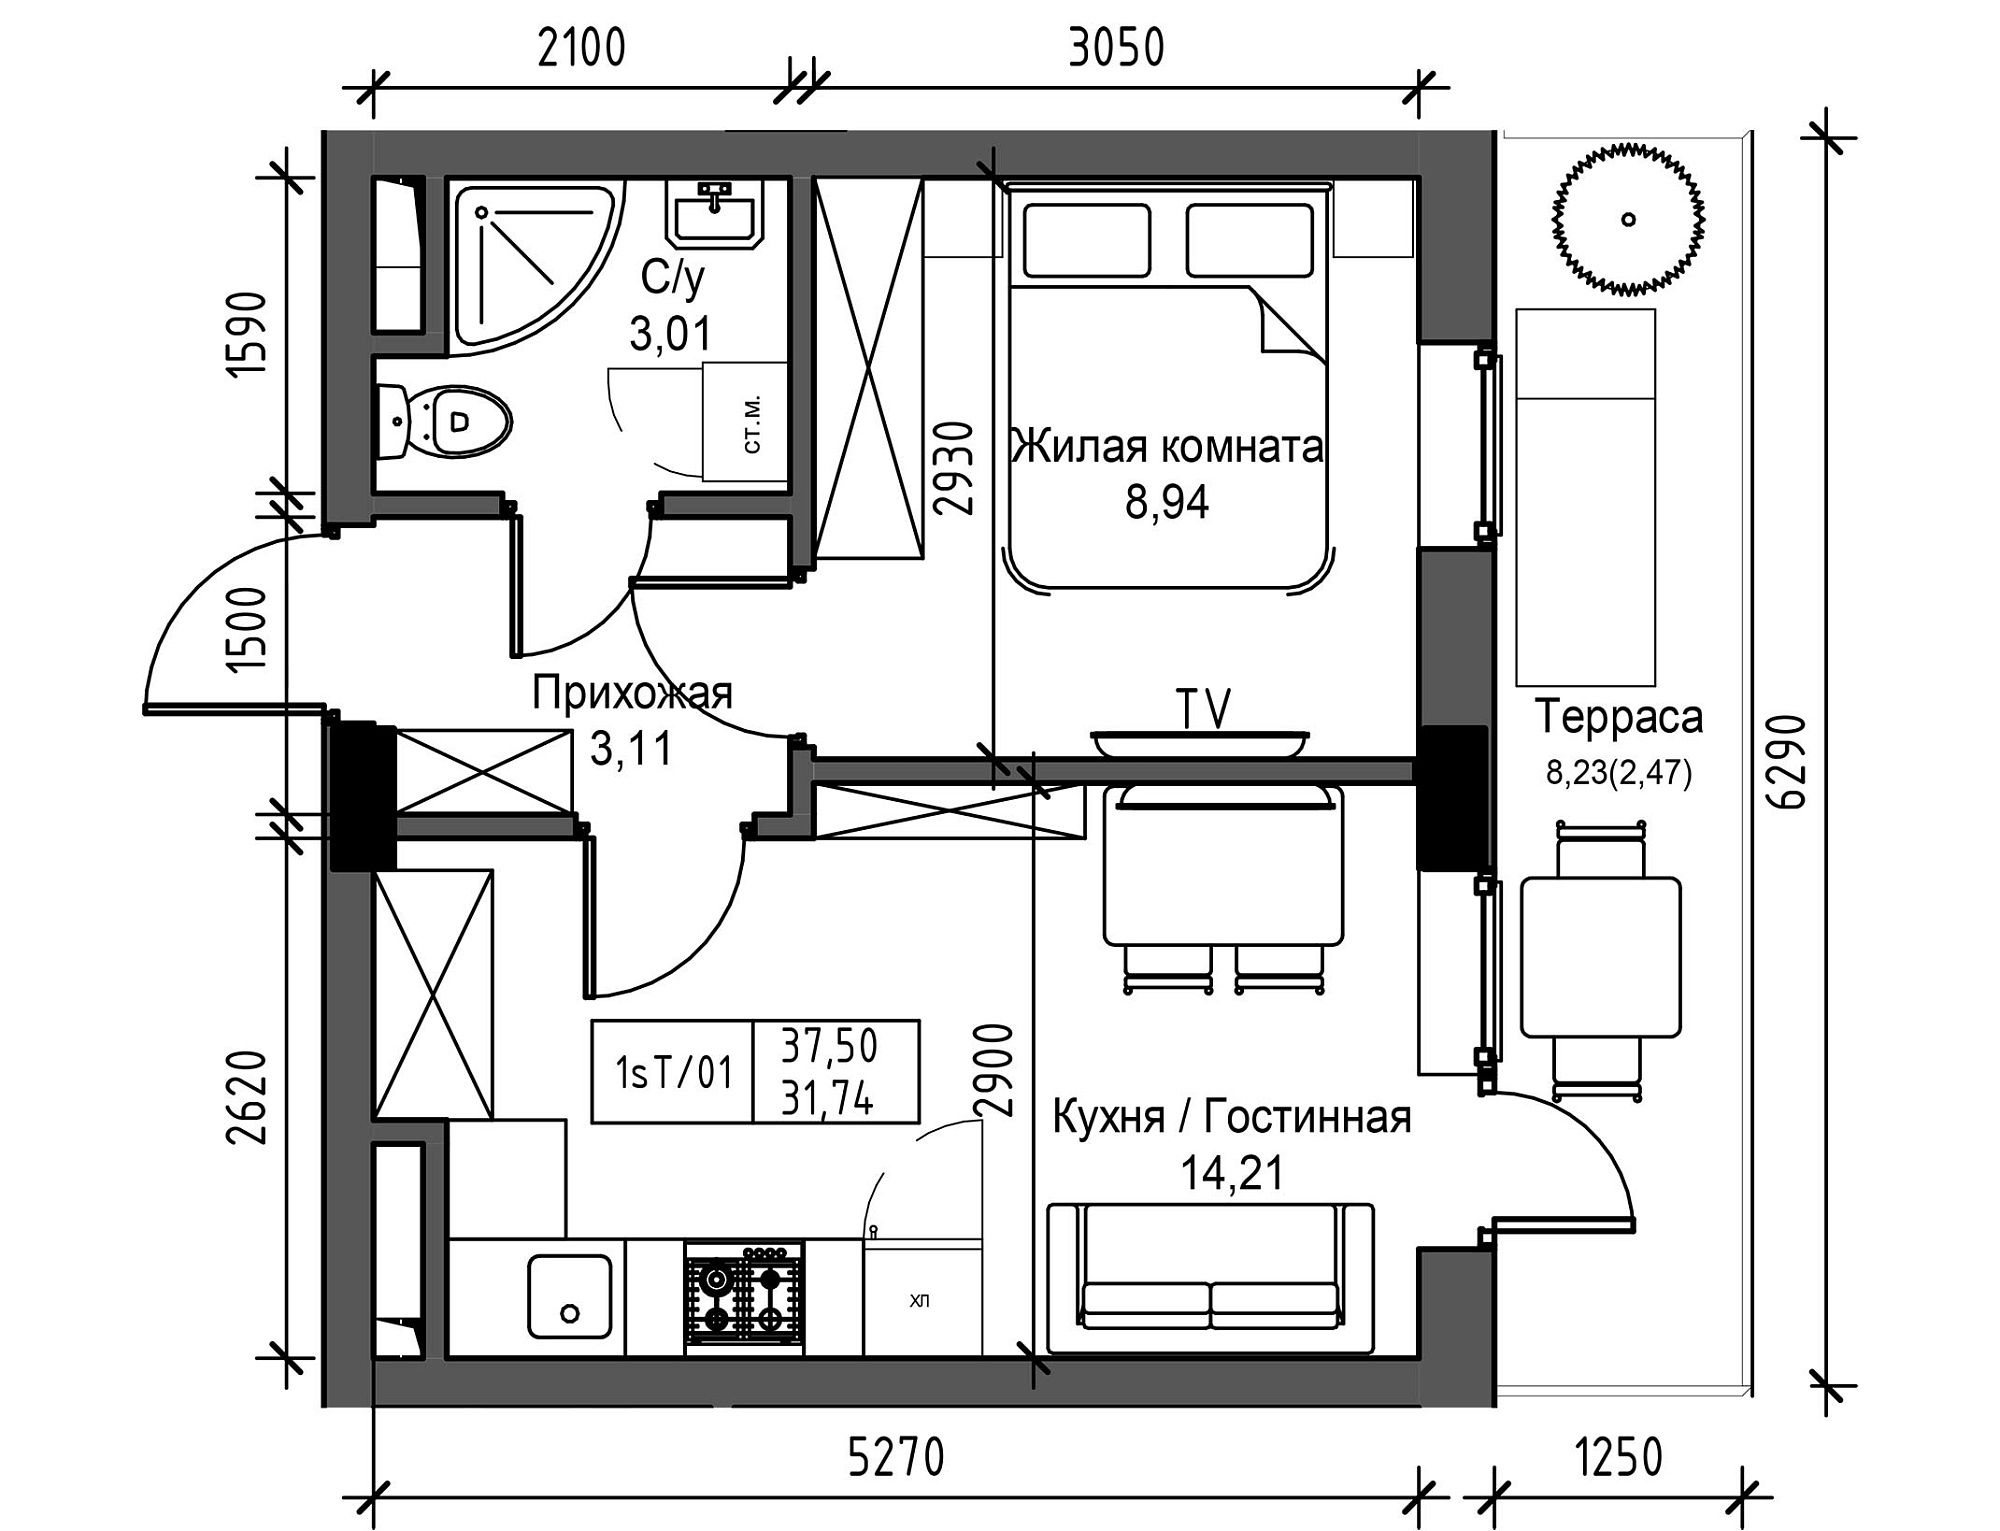 Planning 1-rm flats area 31.74m2, UM-003-06/0055.